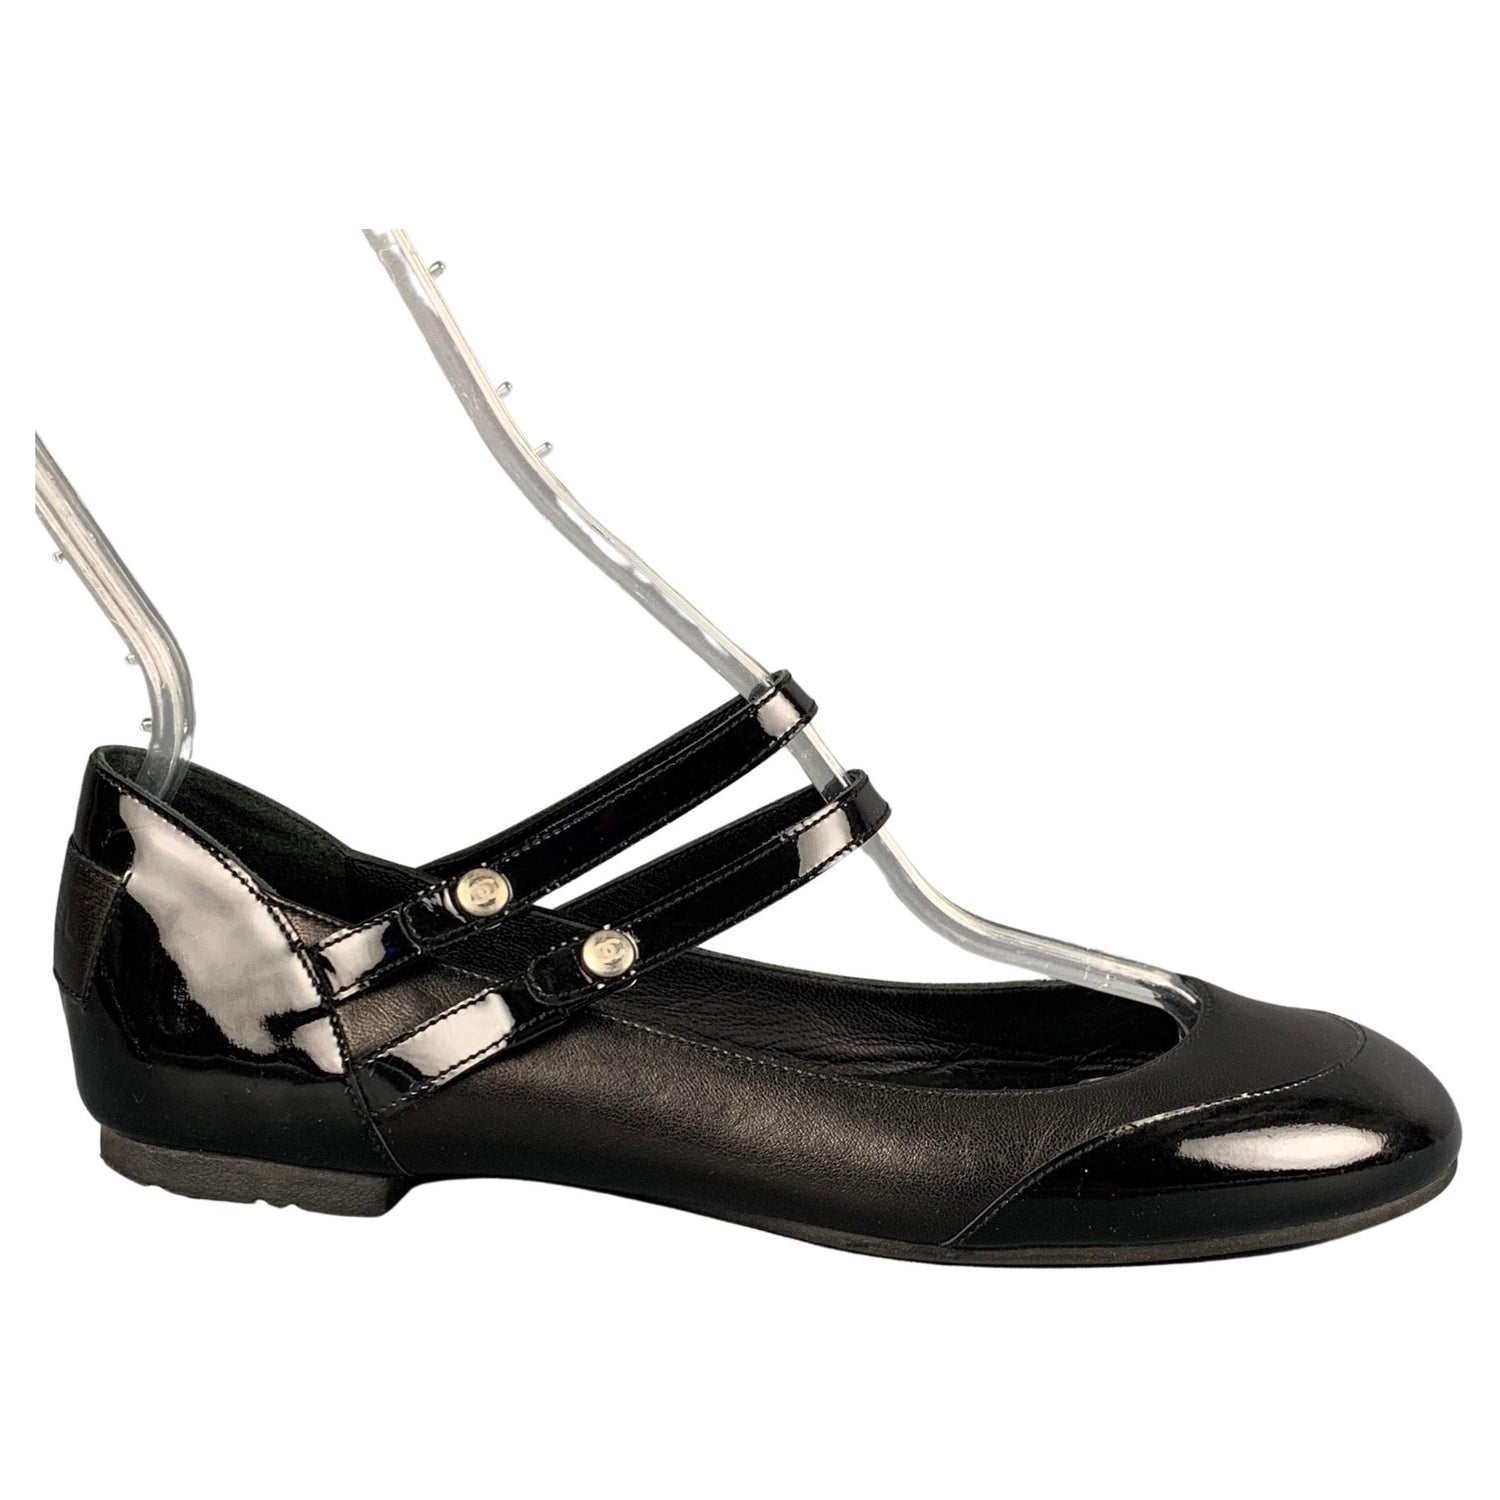 CHANEL, Shoes, Chanel Runway Two Tone Black Beige Mary Jane Heels